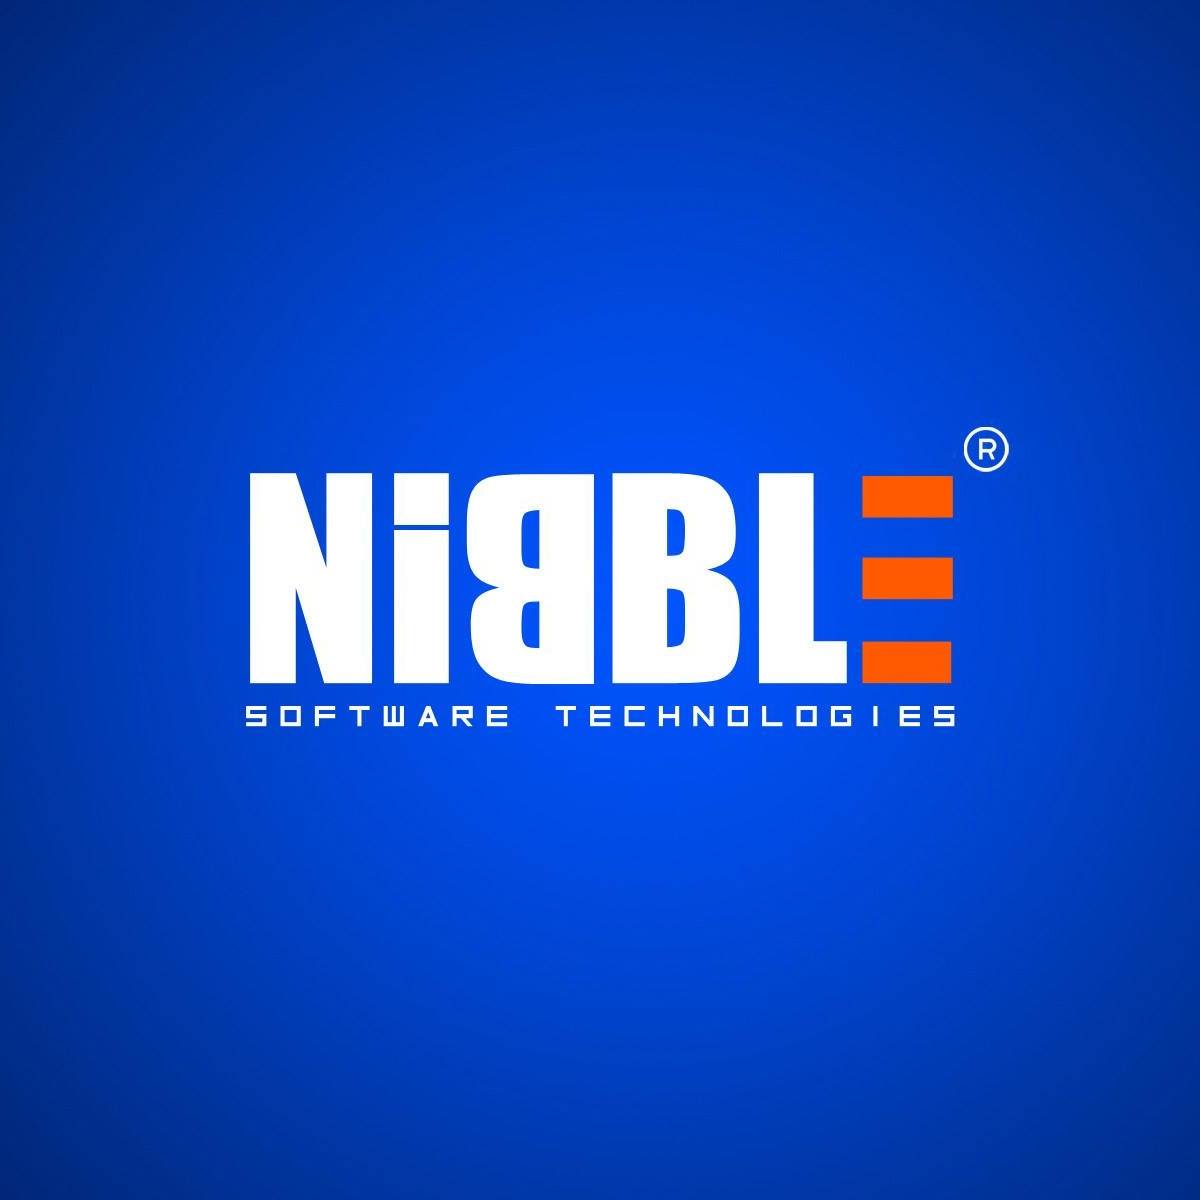 Nibble Software Technologies Pvt Ltd